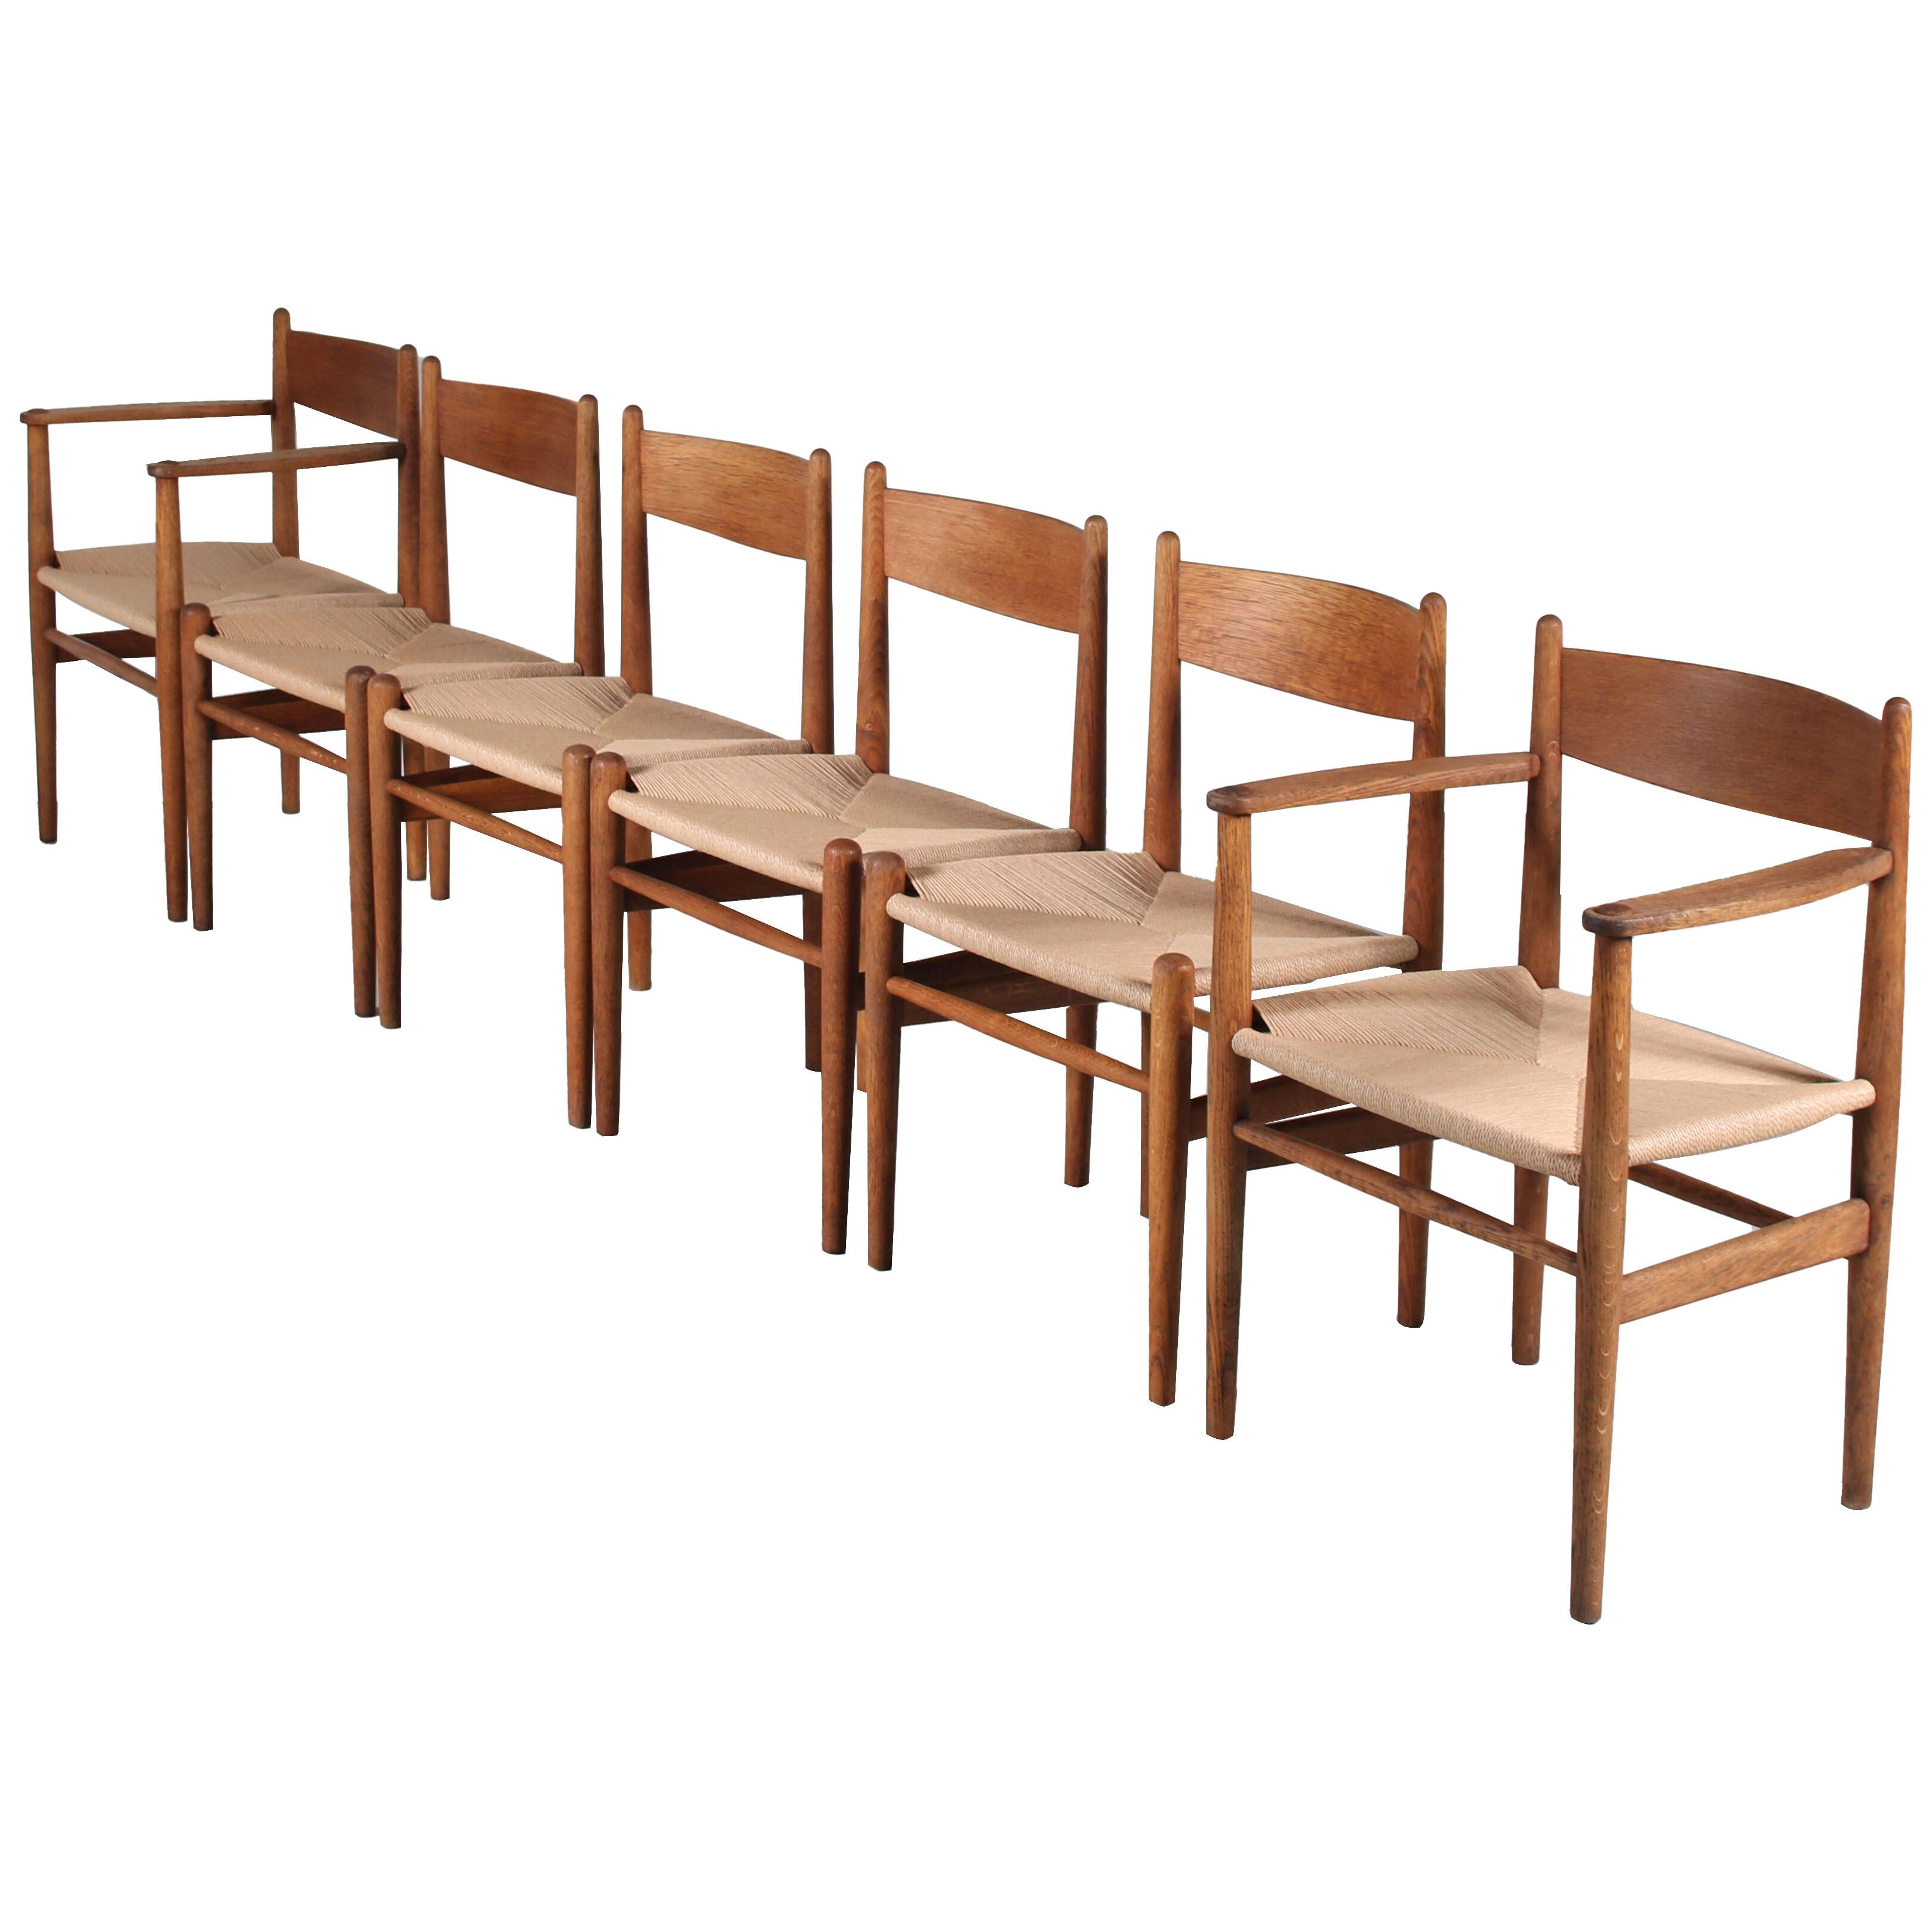 Set of 6 “CH36” Dining Chairs by Hans J. Wegner for Carl Hansen & Son, 1950